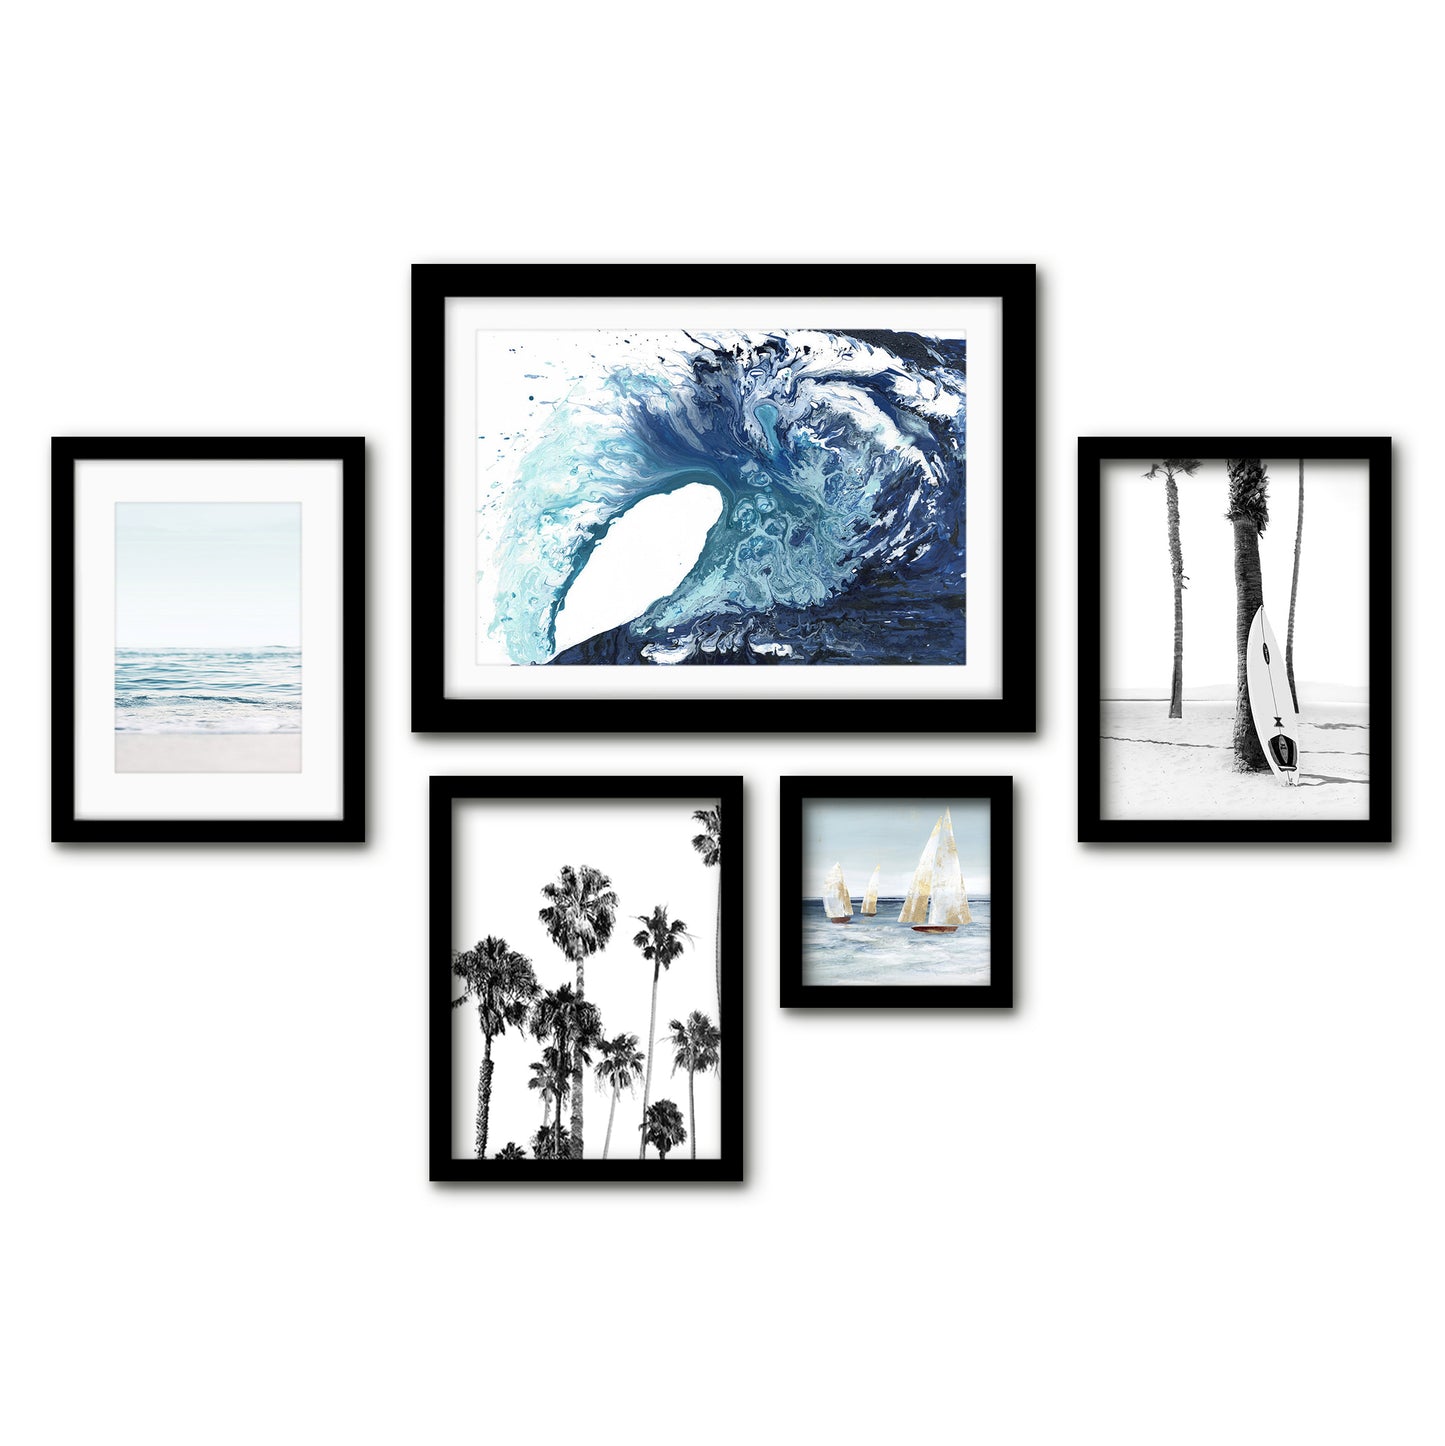 Americanflat 5 Piece Black Framed Gallery Wall Art Set - Blue Ocean Surf Boat